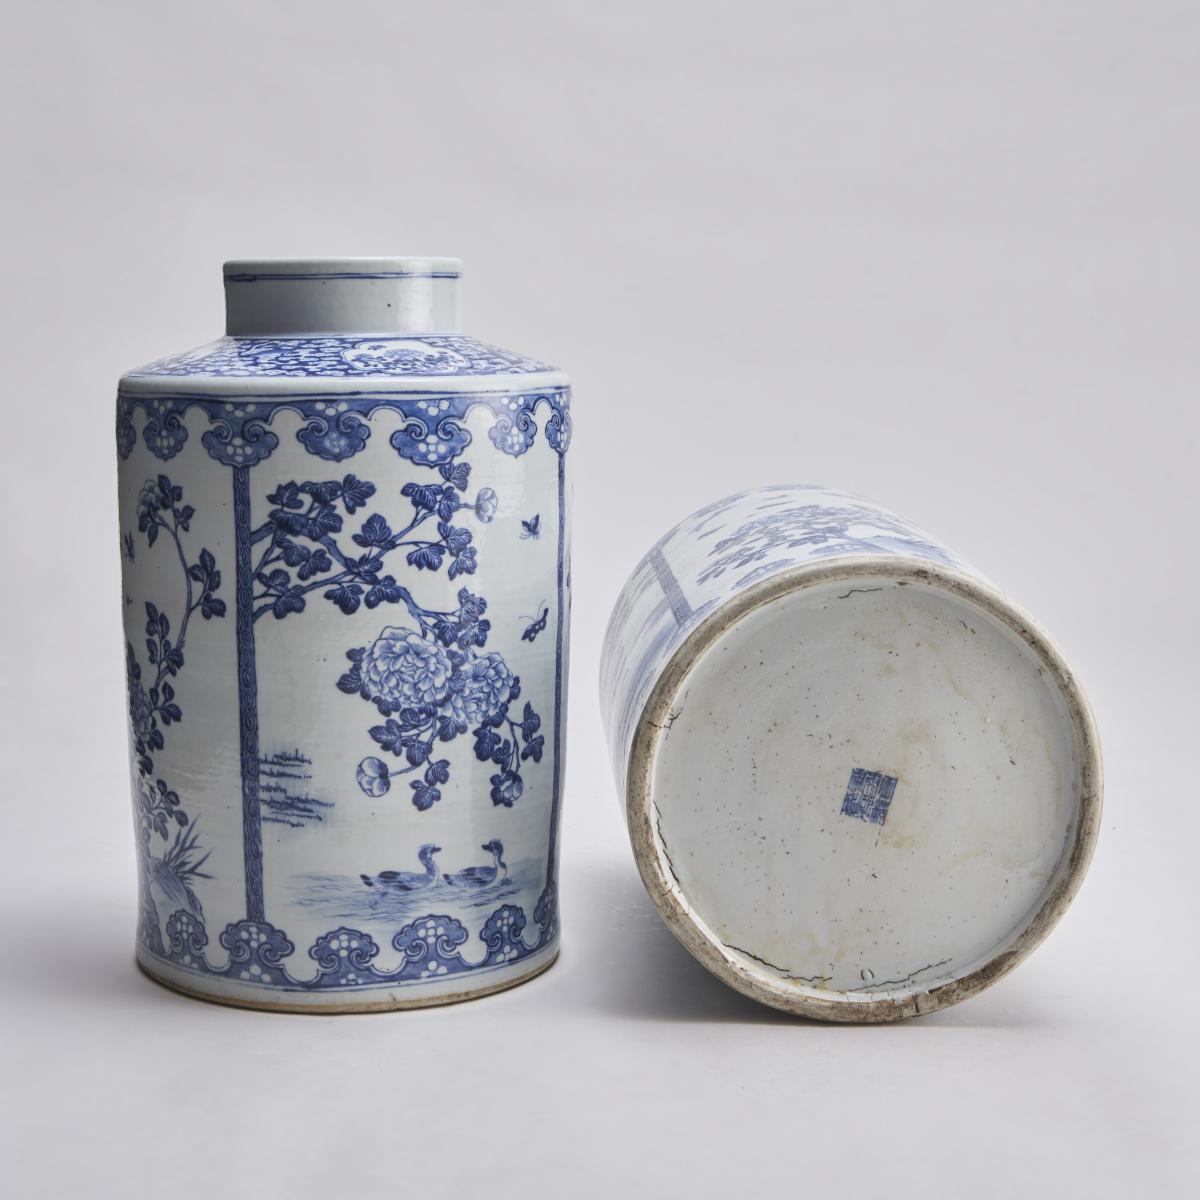 19th Century blue and white circular jars (Circa 1870)